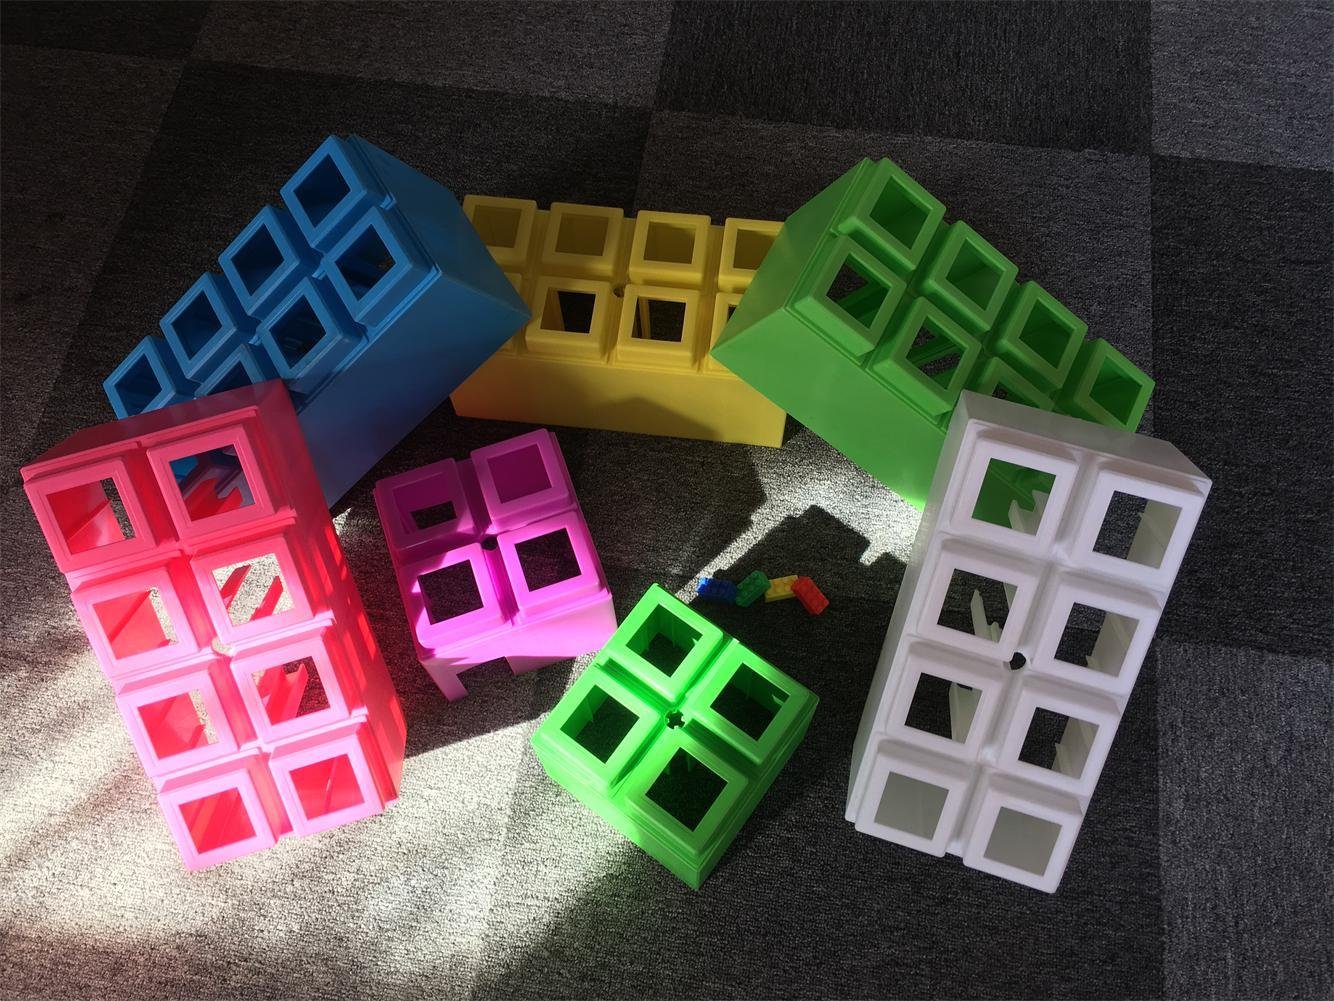 large plastic building blocks toddlers